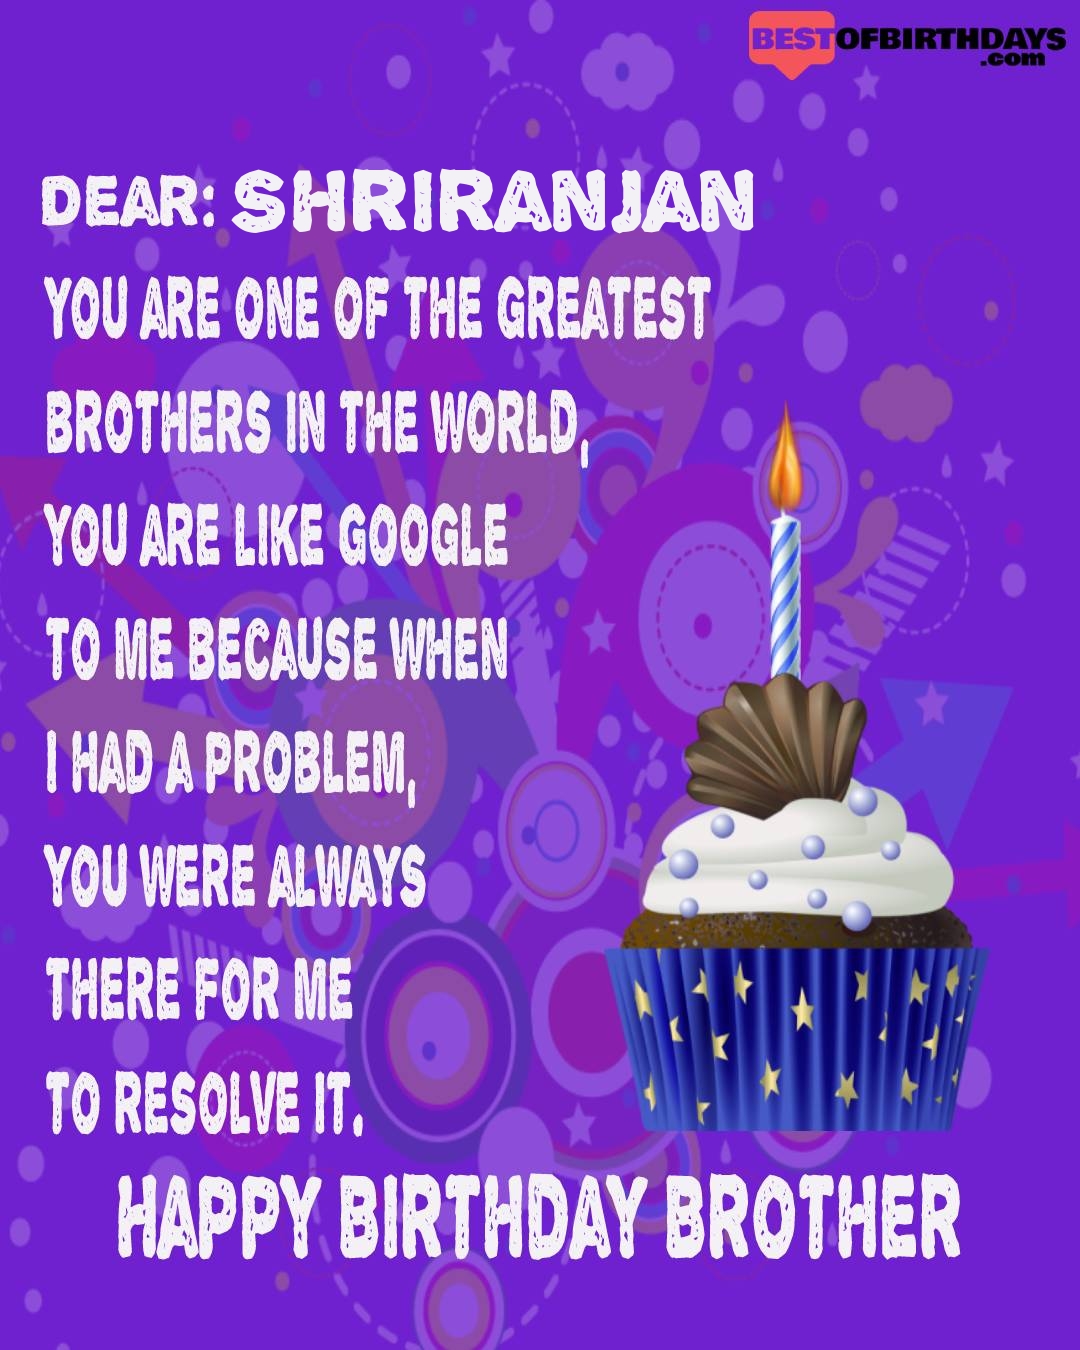 Happy birthday shriranjan bhai brother bro